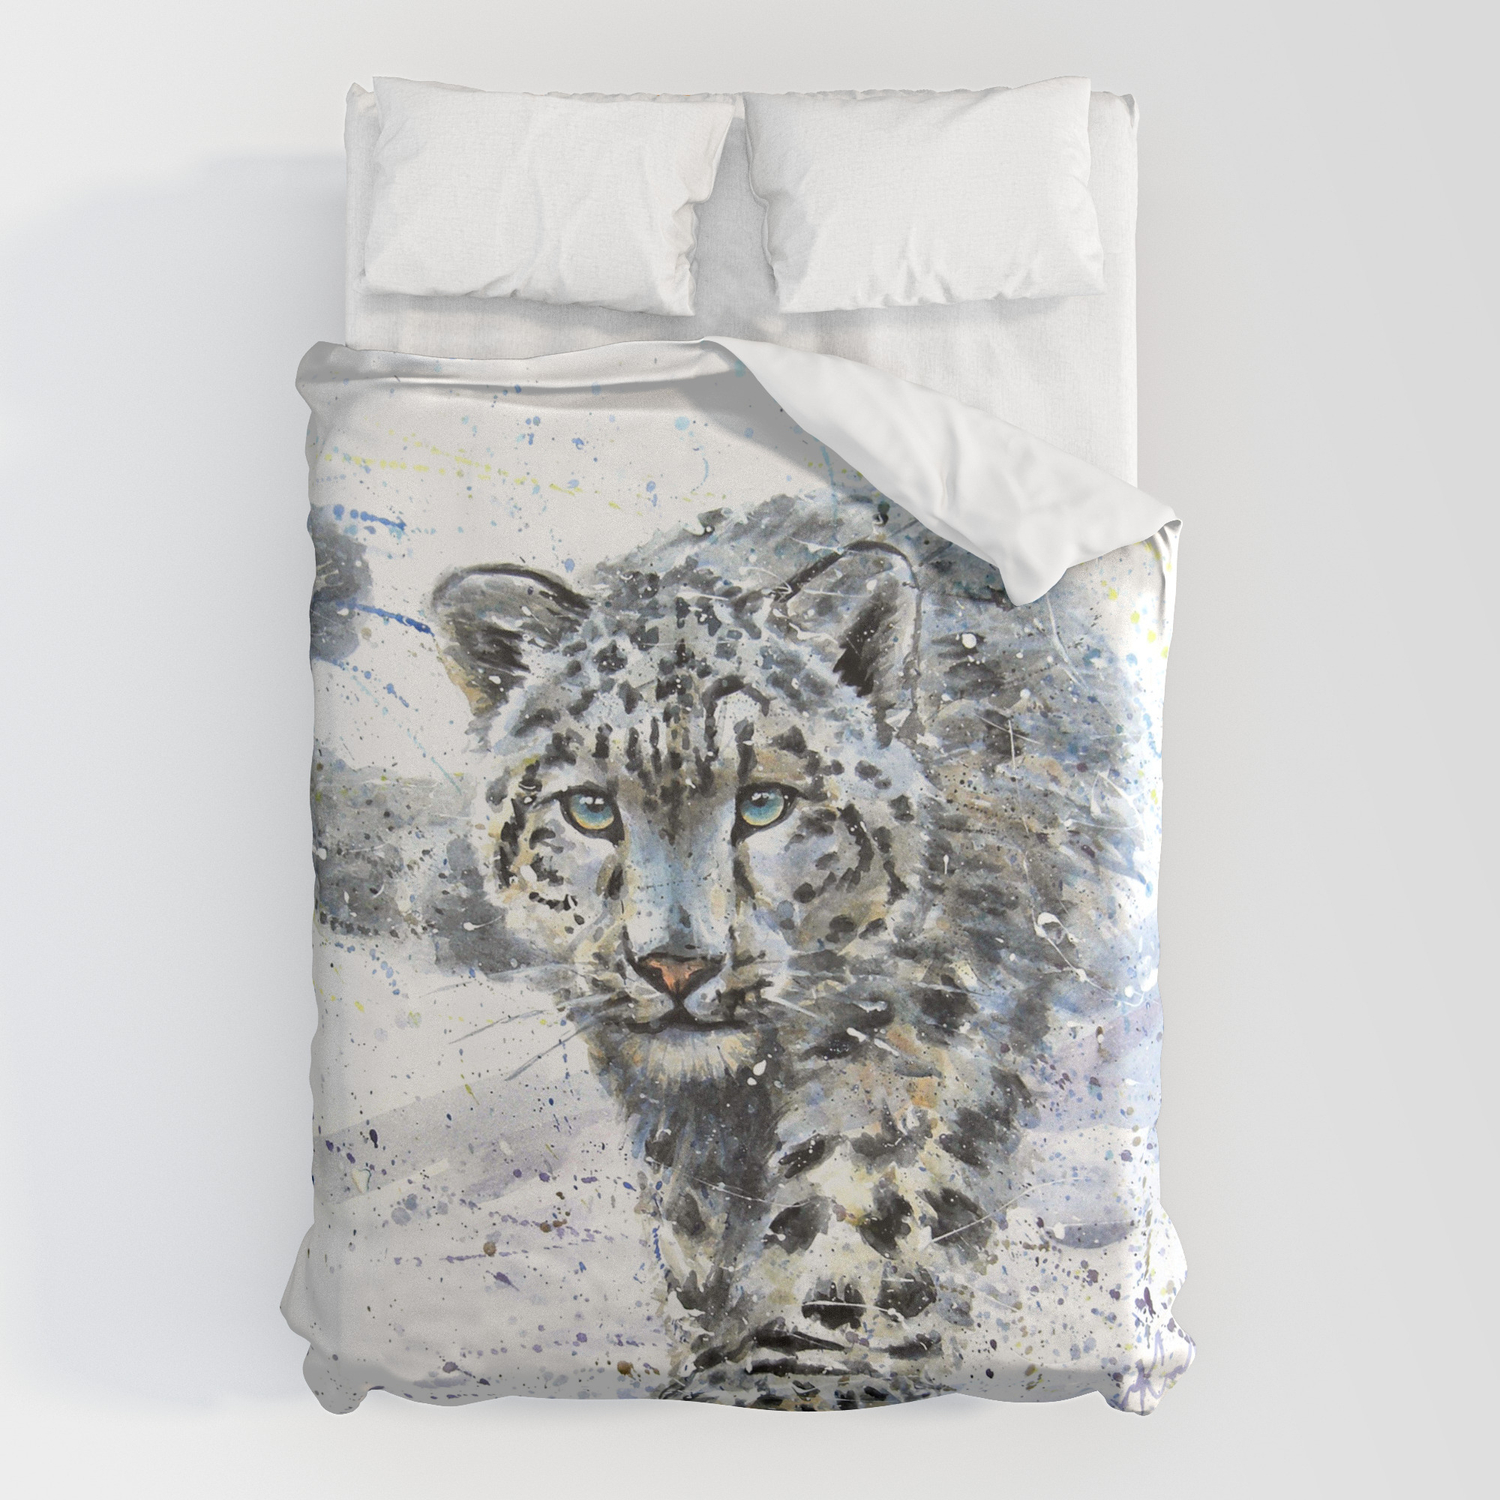 Snow Leopard Duvet Cover By Kostart, Snow Leopard Duvet Cover Queen